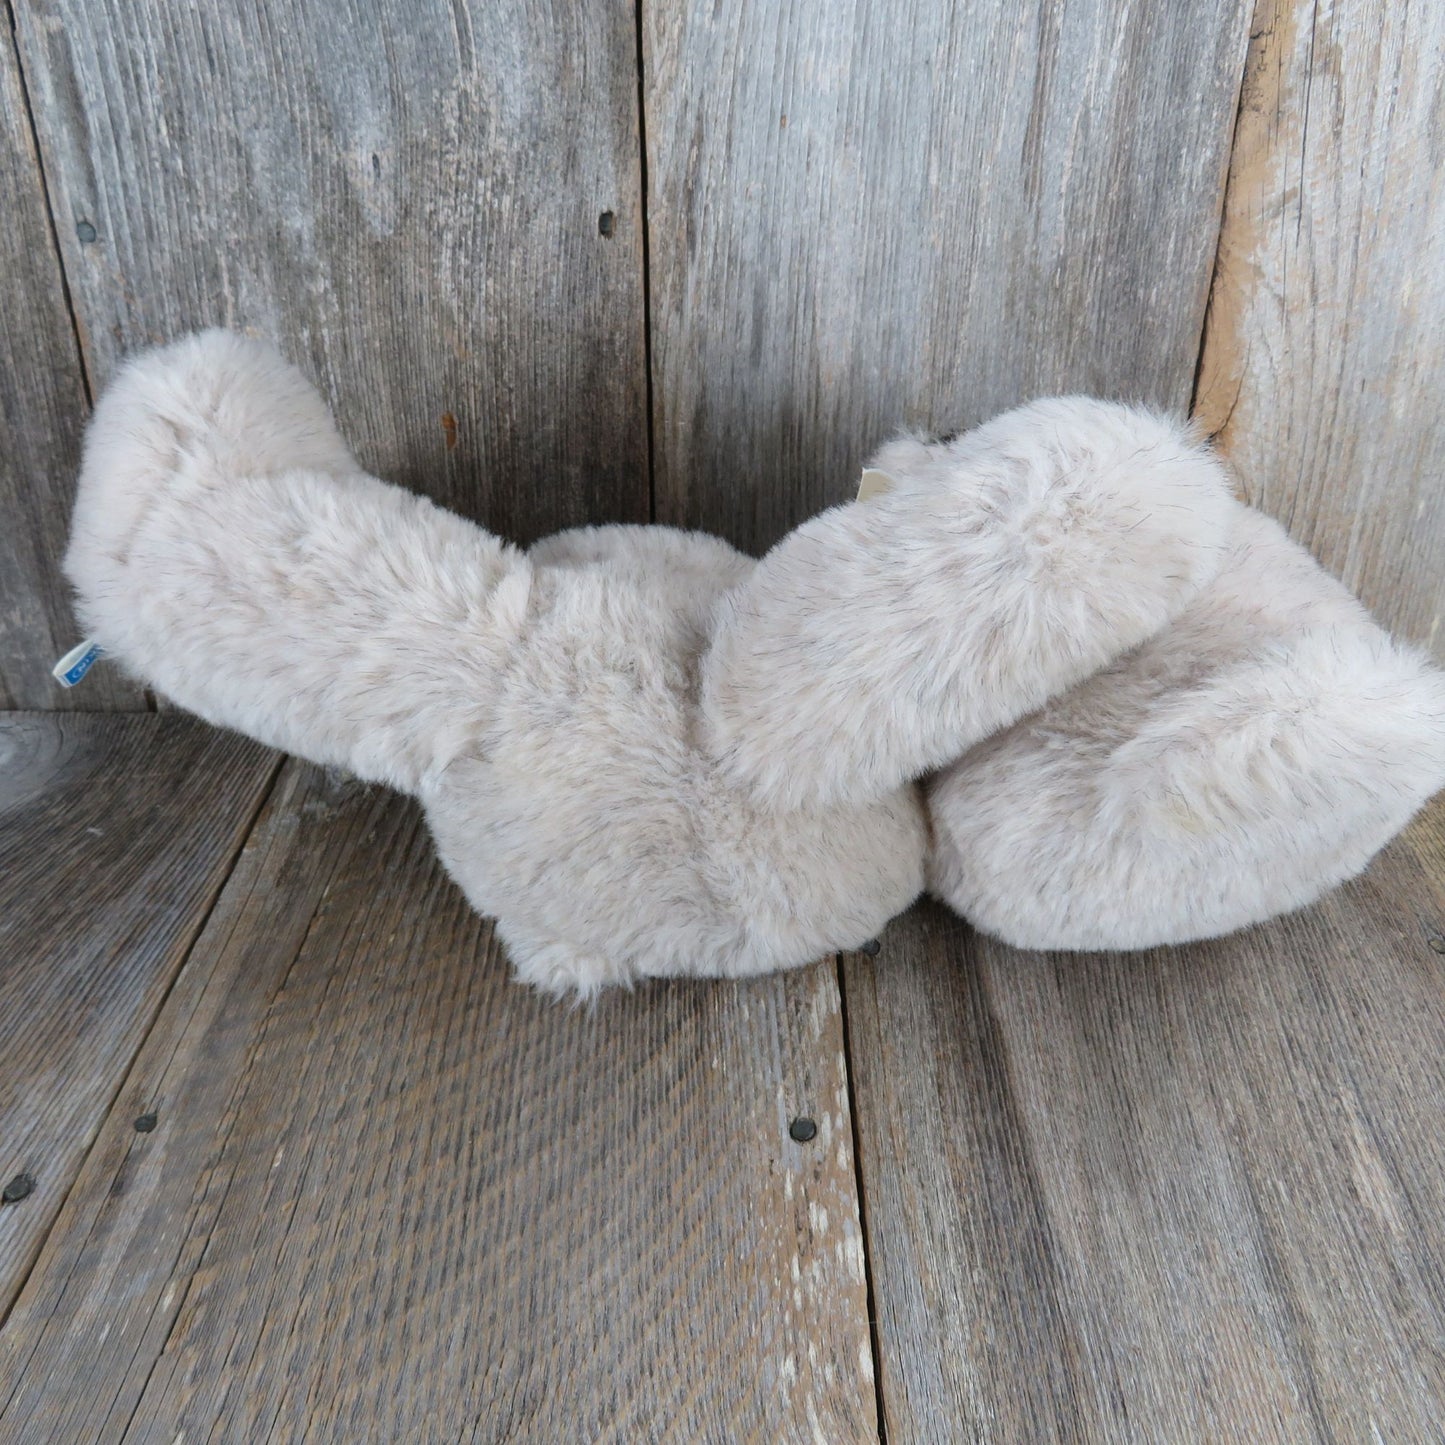 Vintage Teddy Bear Cuddles Plush Arms Up Gray Beige Stuffed Animal 1979